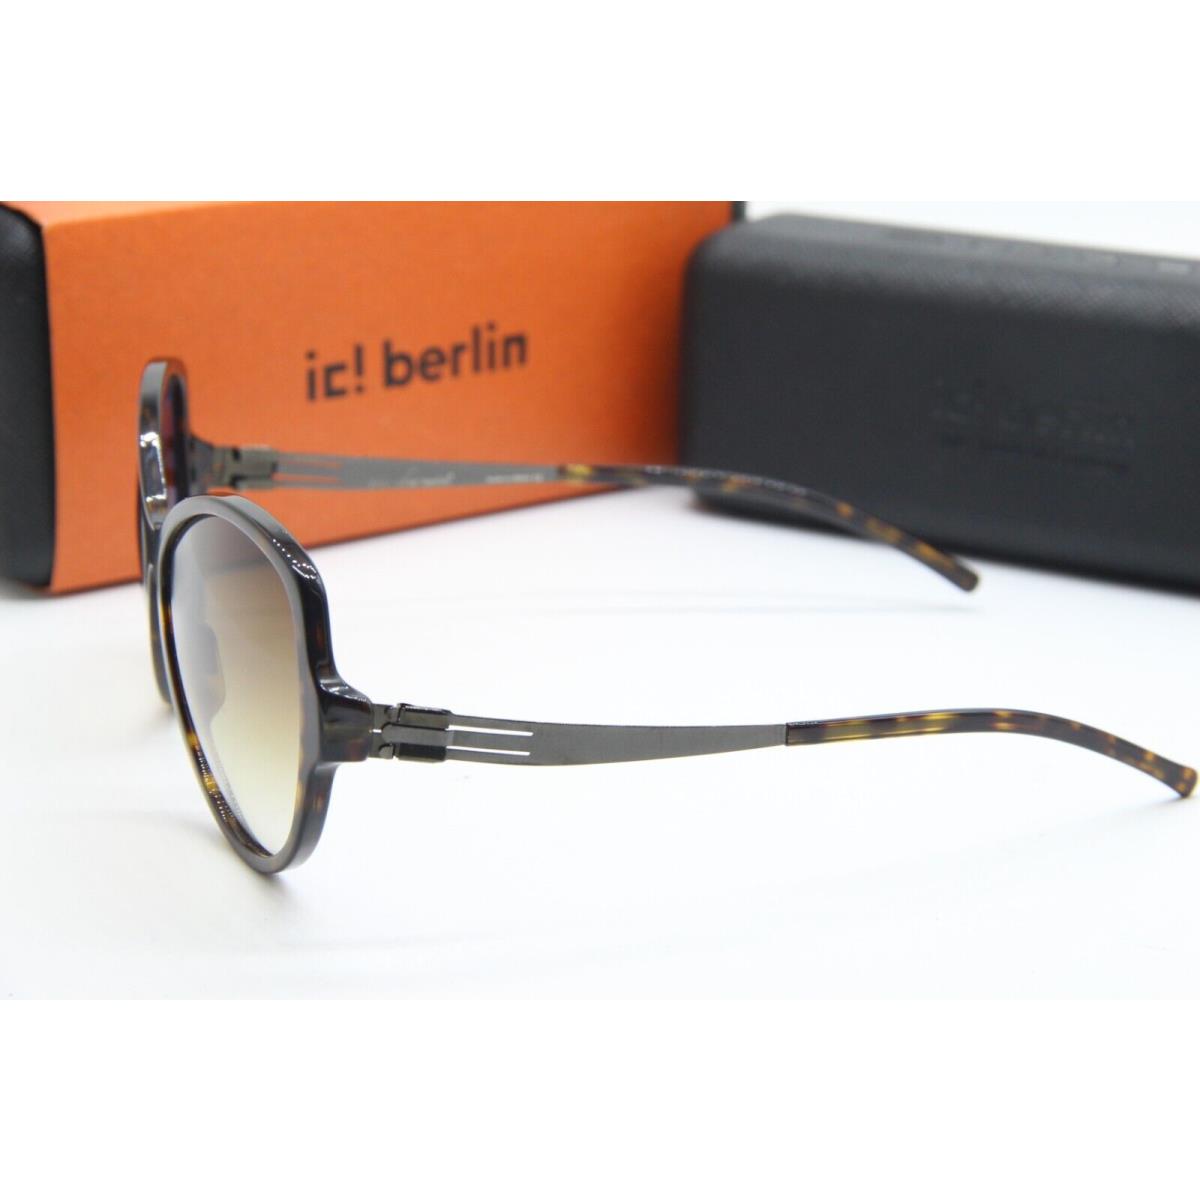 ic! berlin sunglasses PEGGY - GUNMETAL HAVANA Frame, Brown Lens 1